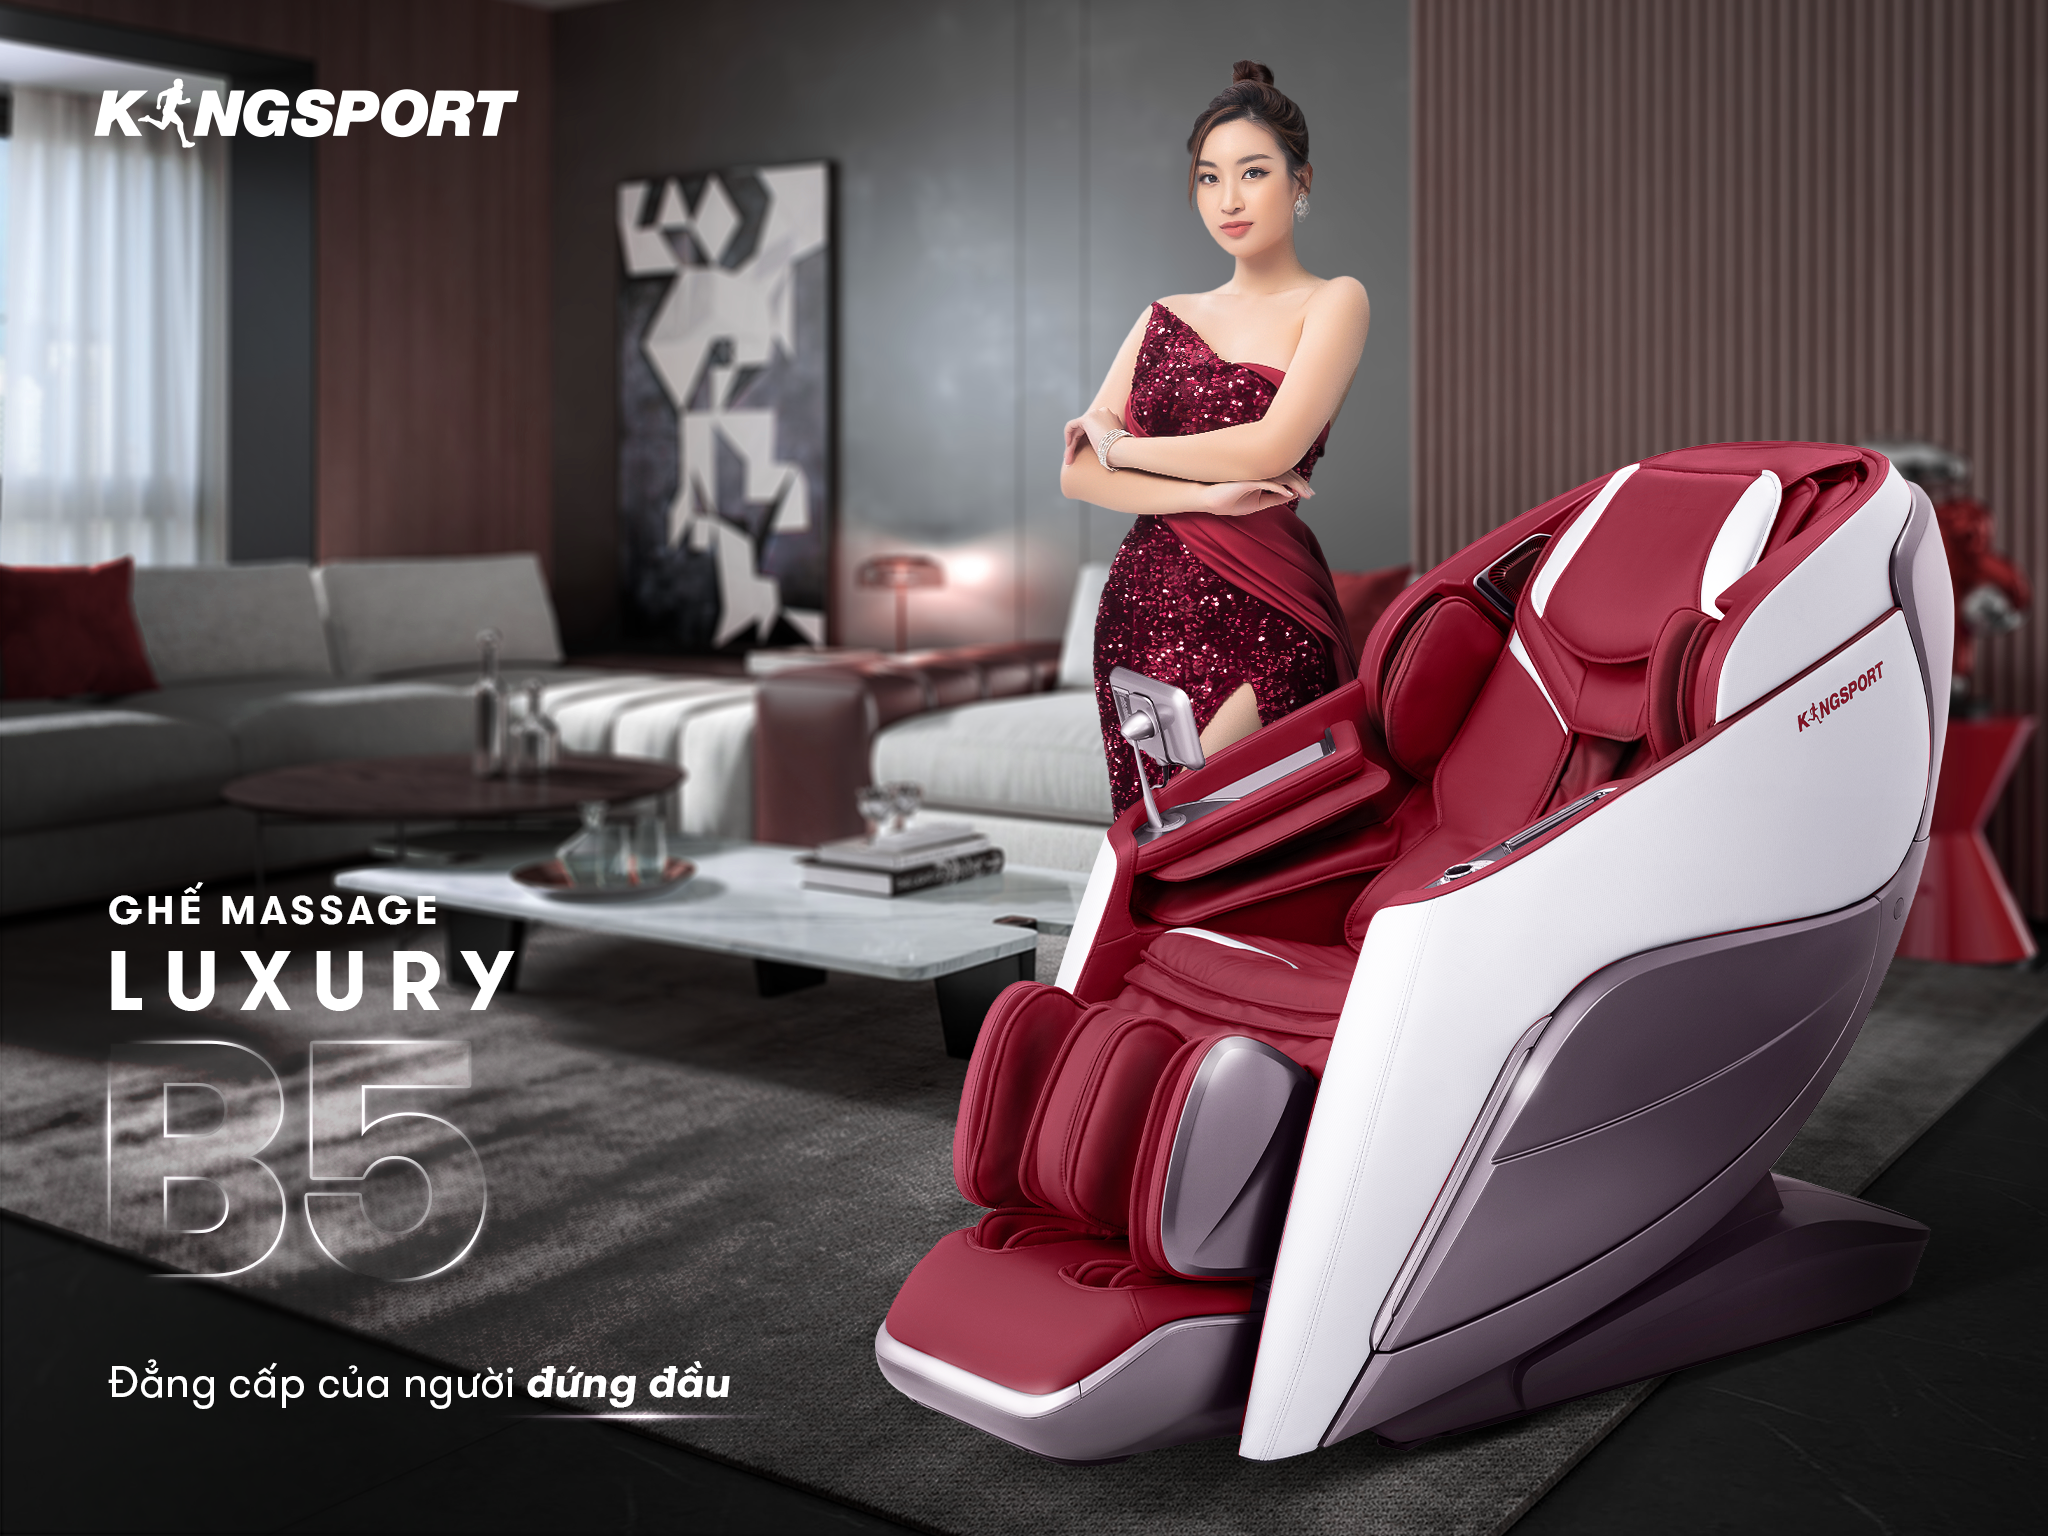 Ghế massage KingSport Luxury B5